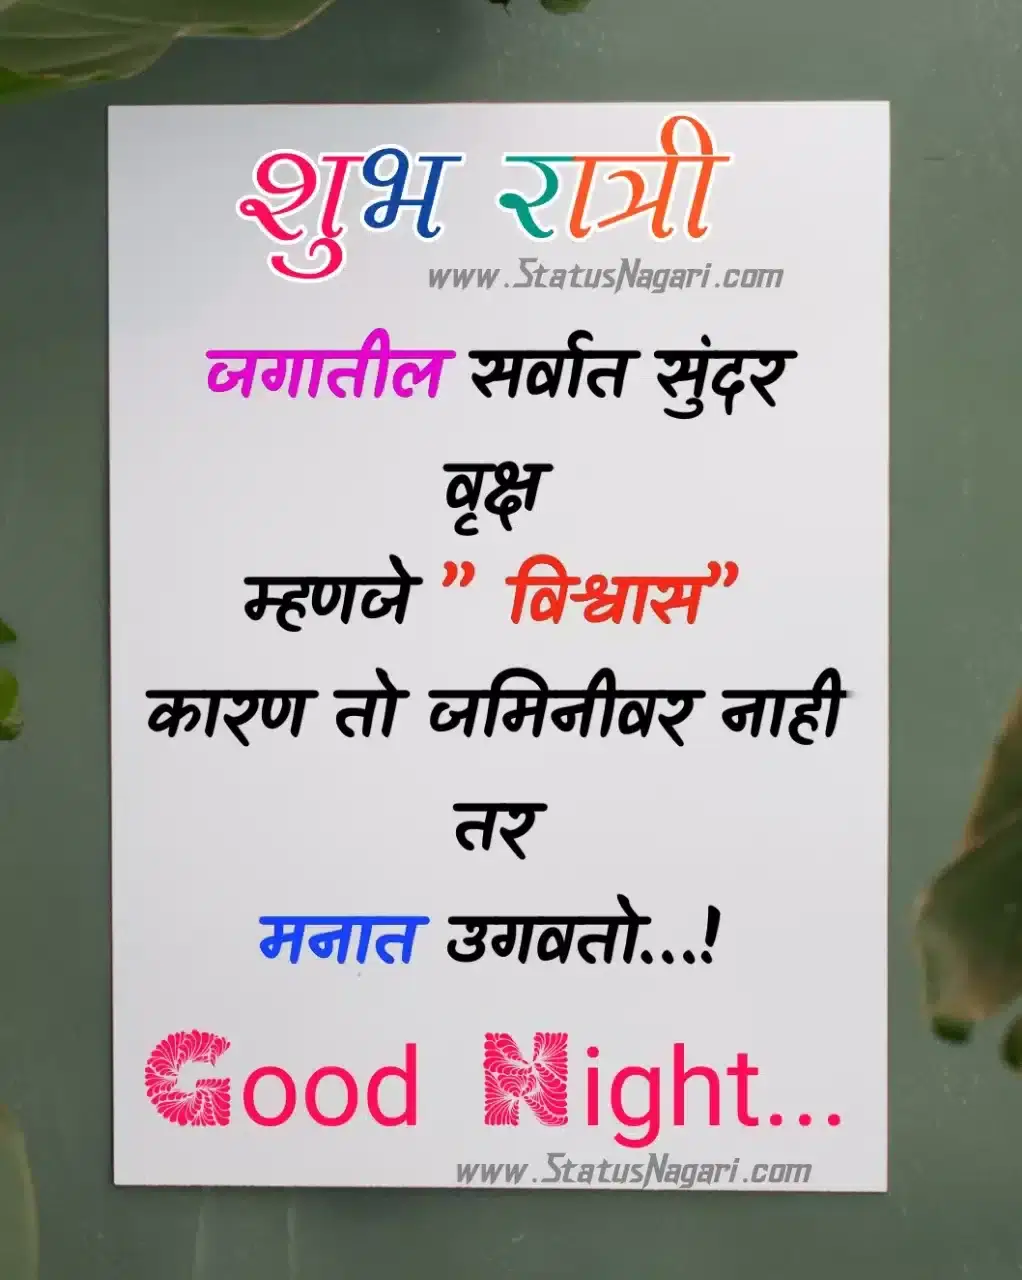 ratri message shubh ratri status shubh ratri marathi रात्री शुभ रात्री मराठी मेसेज शुभ रात्री फुले गुड नाईट #शुभ रात्री good night pic good night images